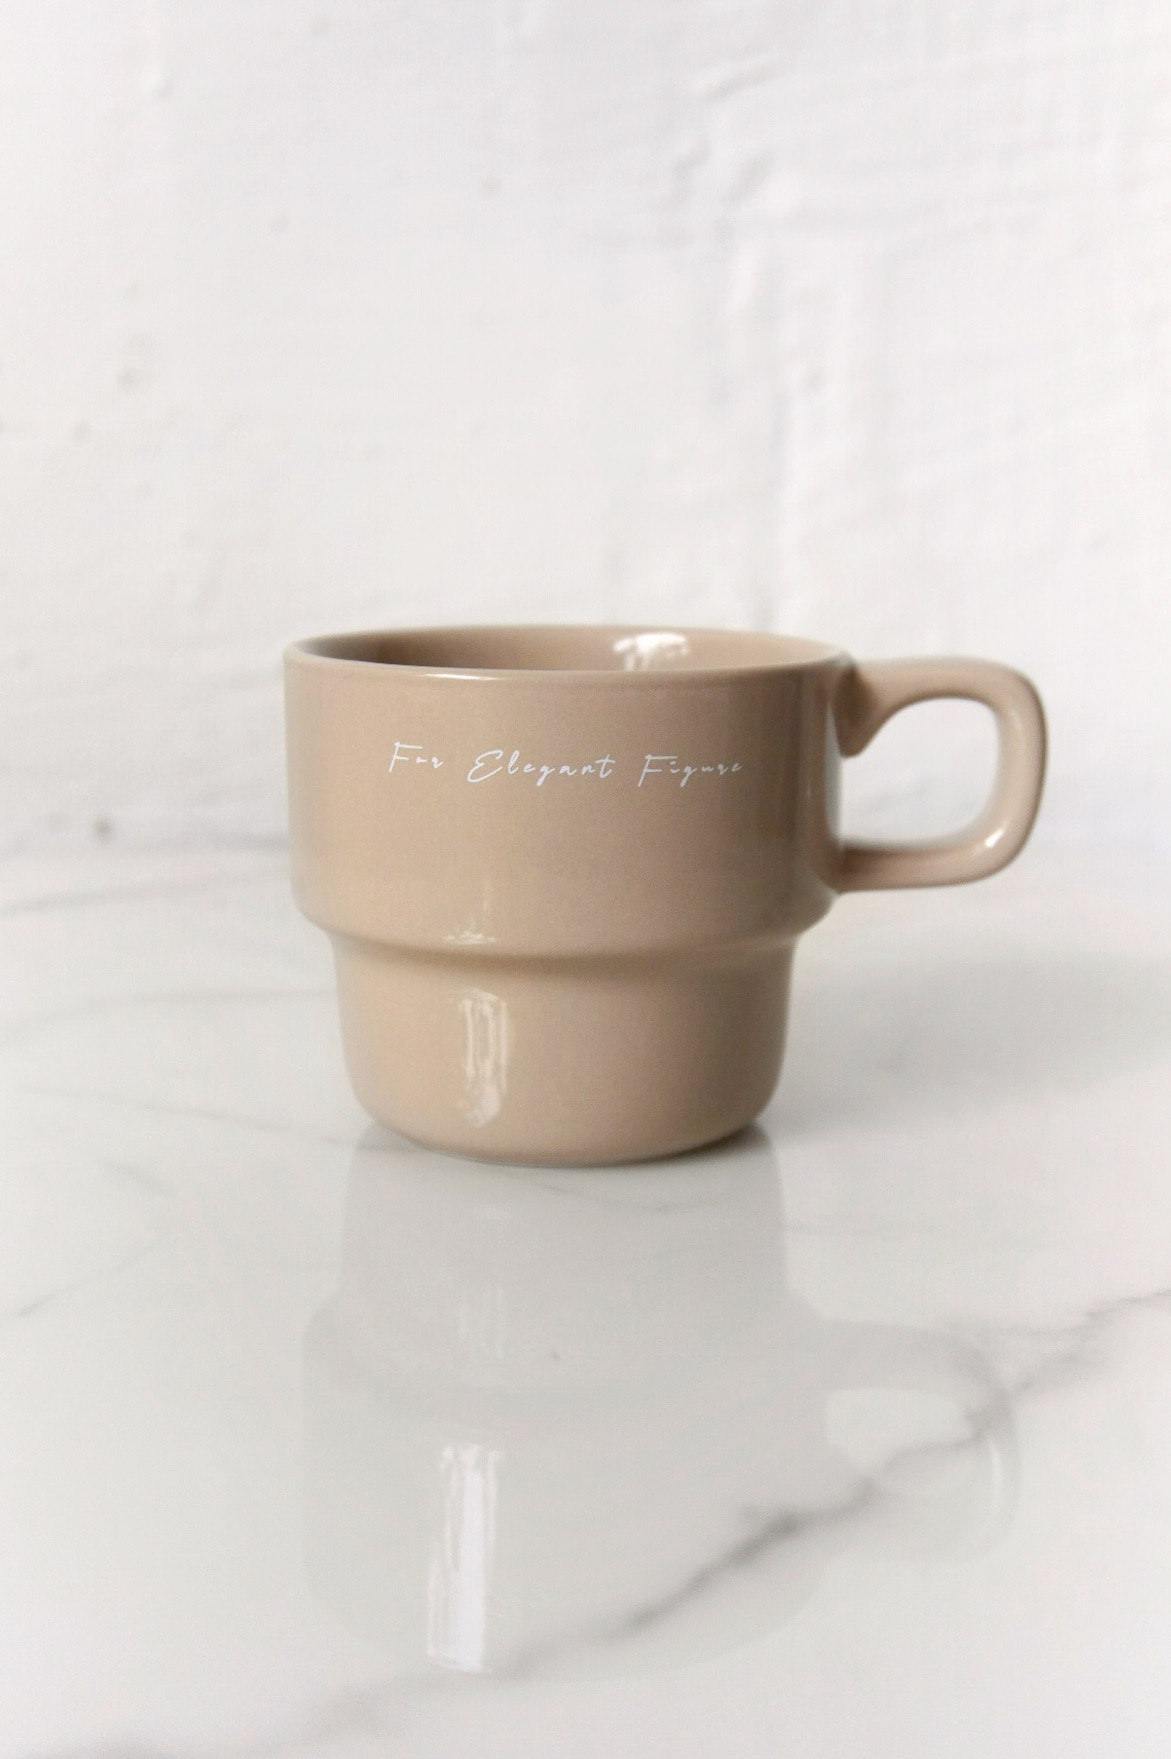 [METROPOLITICIAN] For Elegant Firgure Mug - Oatmeal